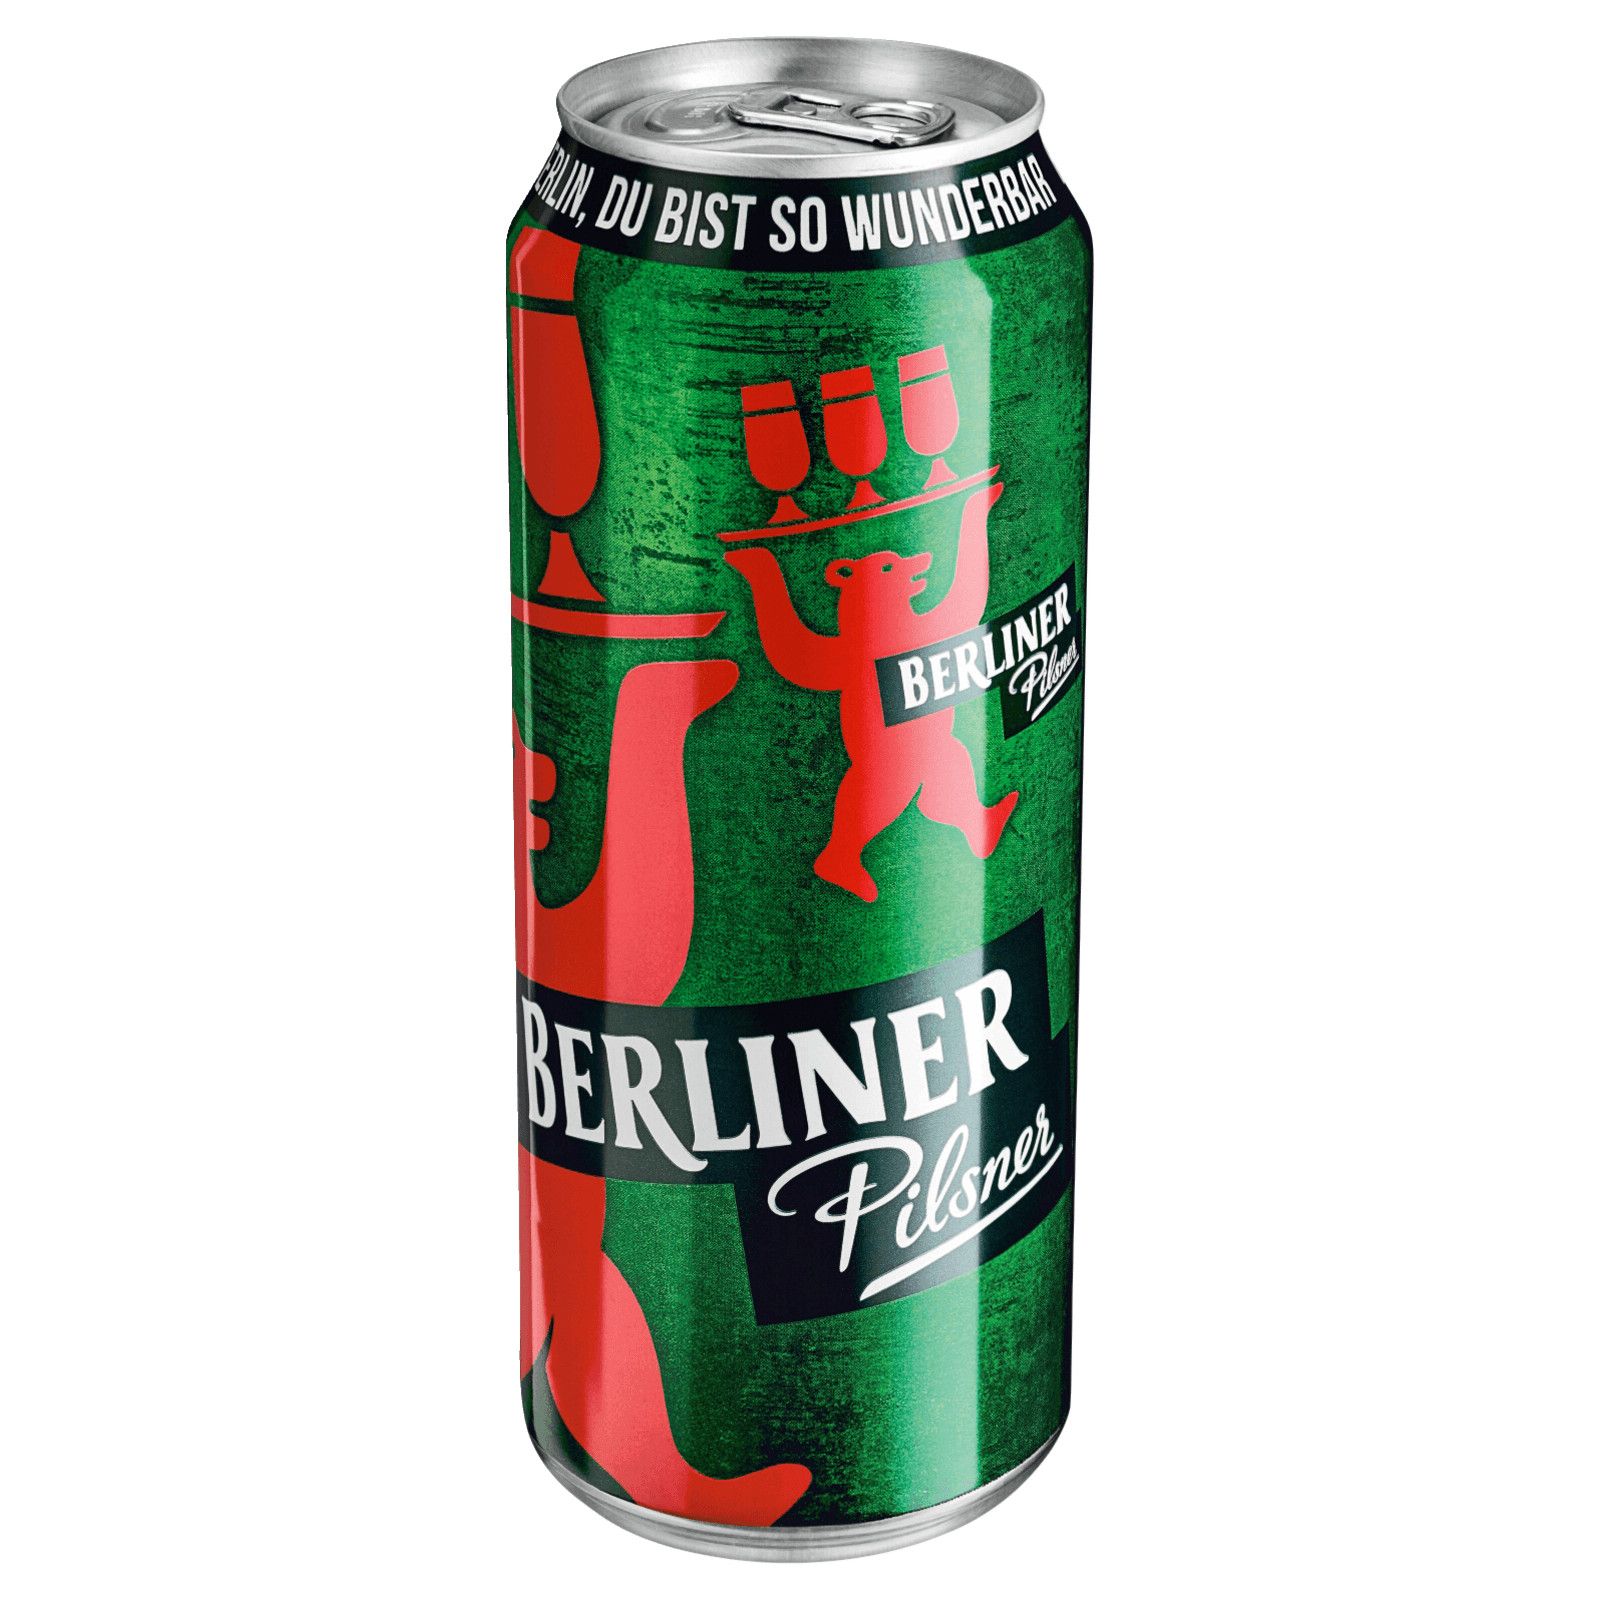  Berliner Pilsner 5.0% 500ml - Bia Đức 